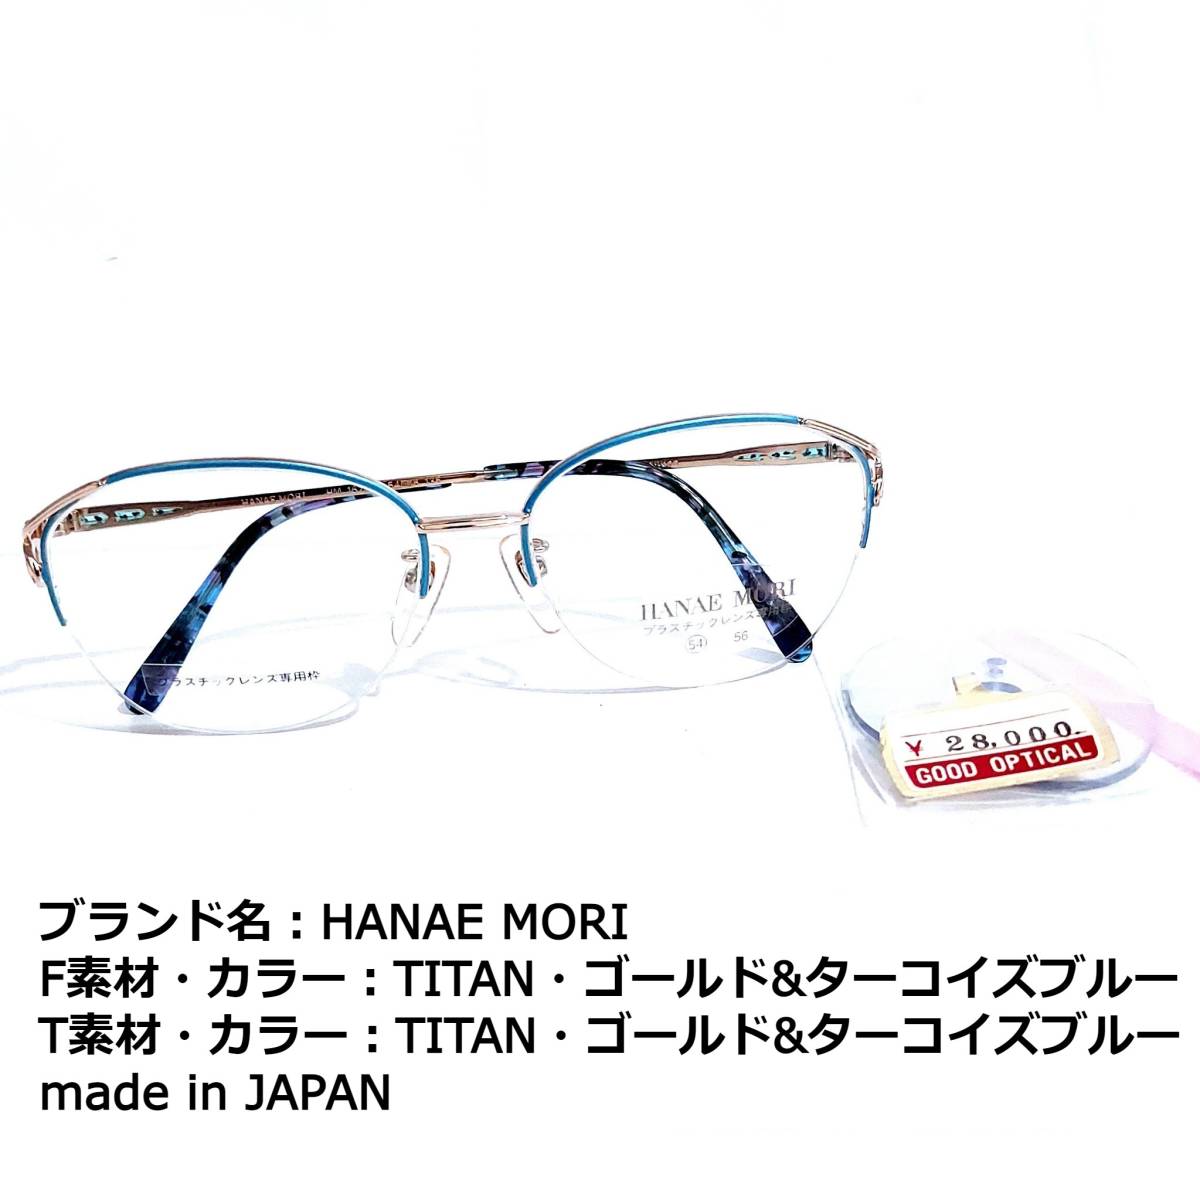 No.1624メガネ HANAE MORI【度数入り込み価格】 | eclipseseal.com